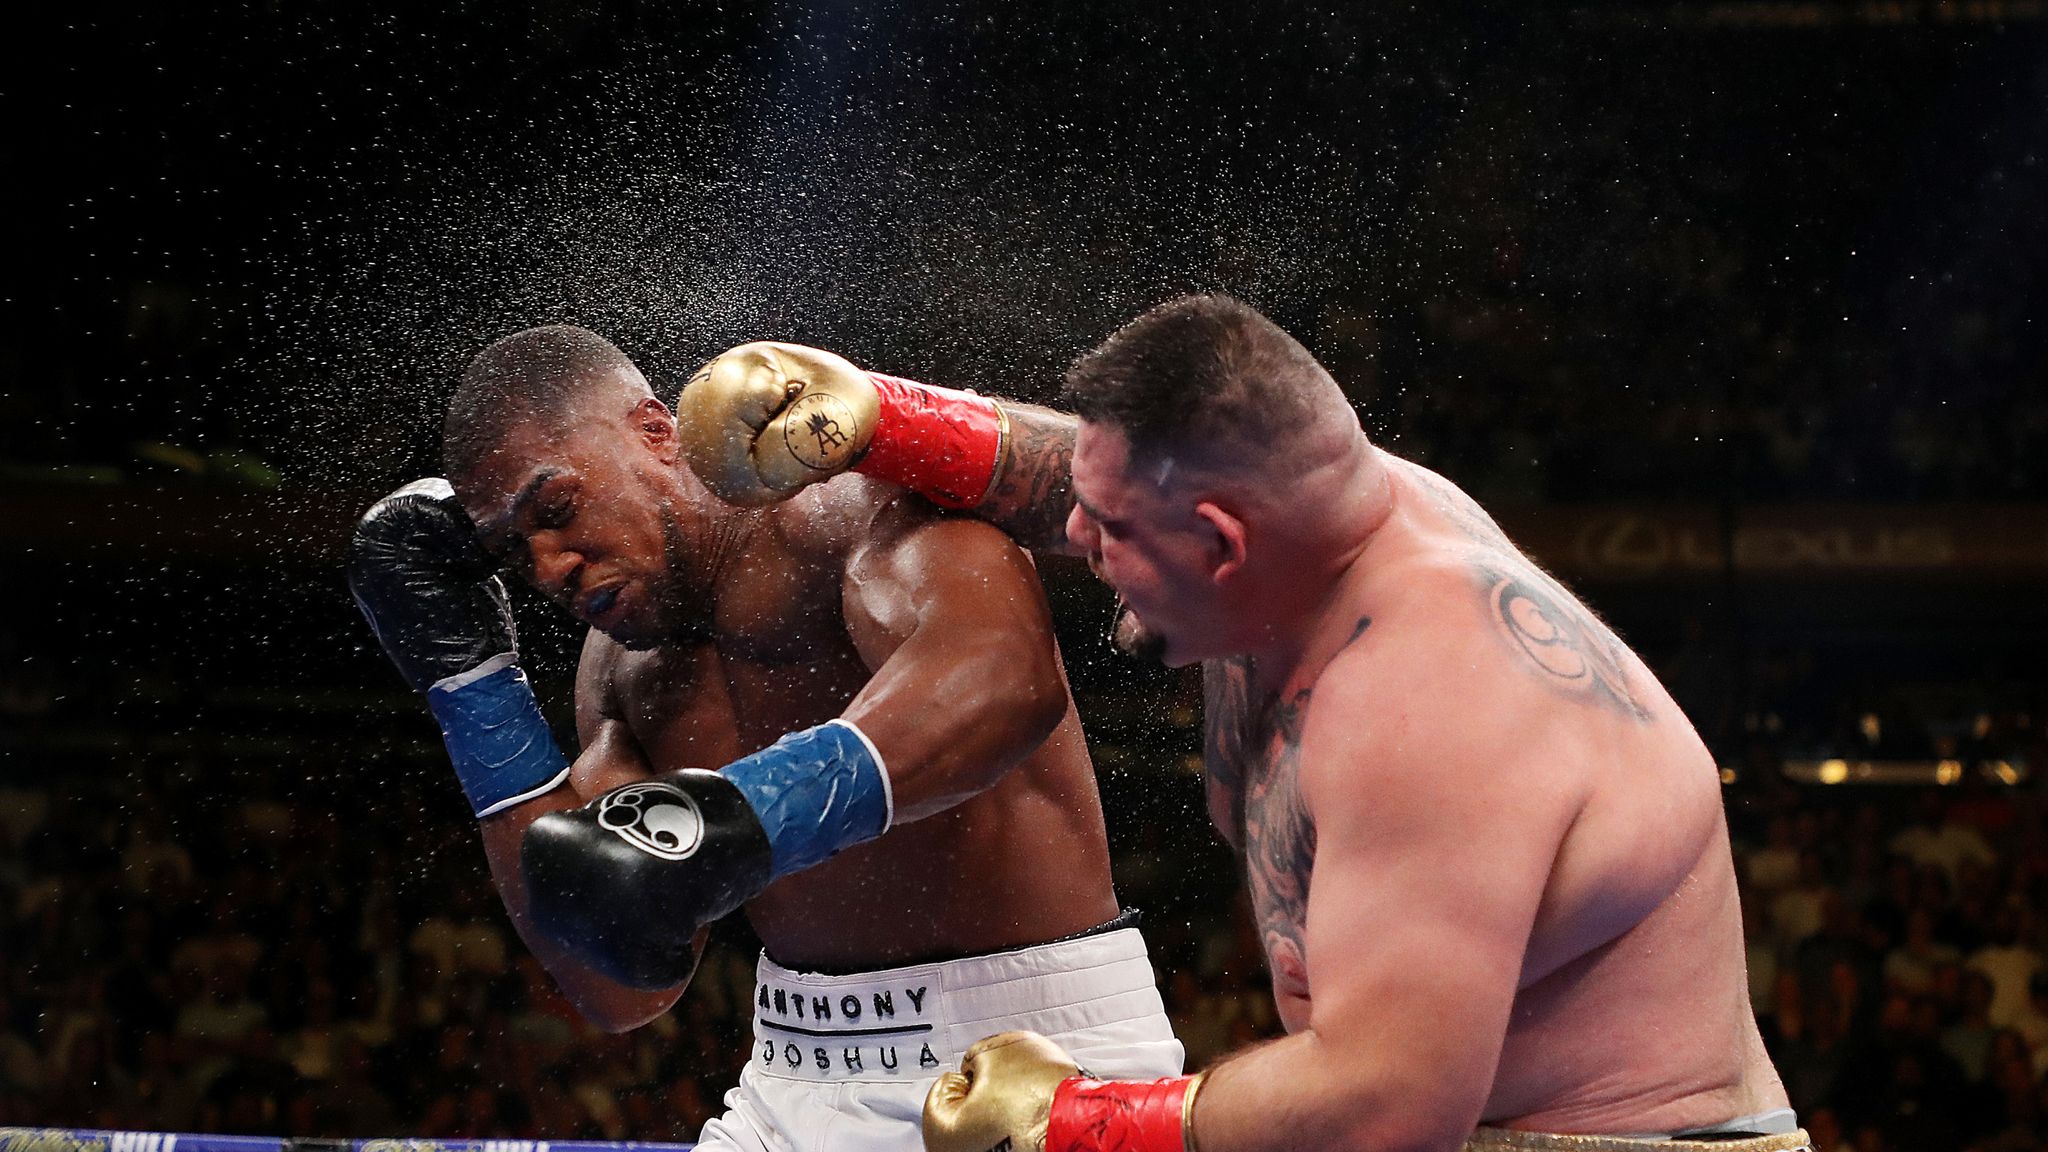 Ren og skær Elemental Wedge Joshua vs Ruiz Jr: Anthony Joshua beaten by Andy Ruiz Jr in stunning New  York shock | Boxing News | Sky Sports